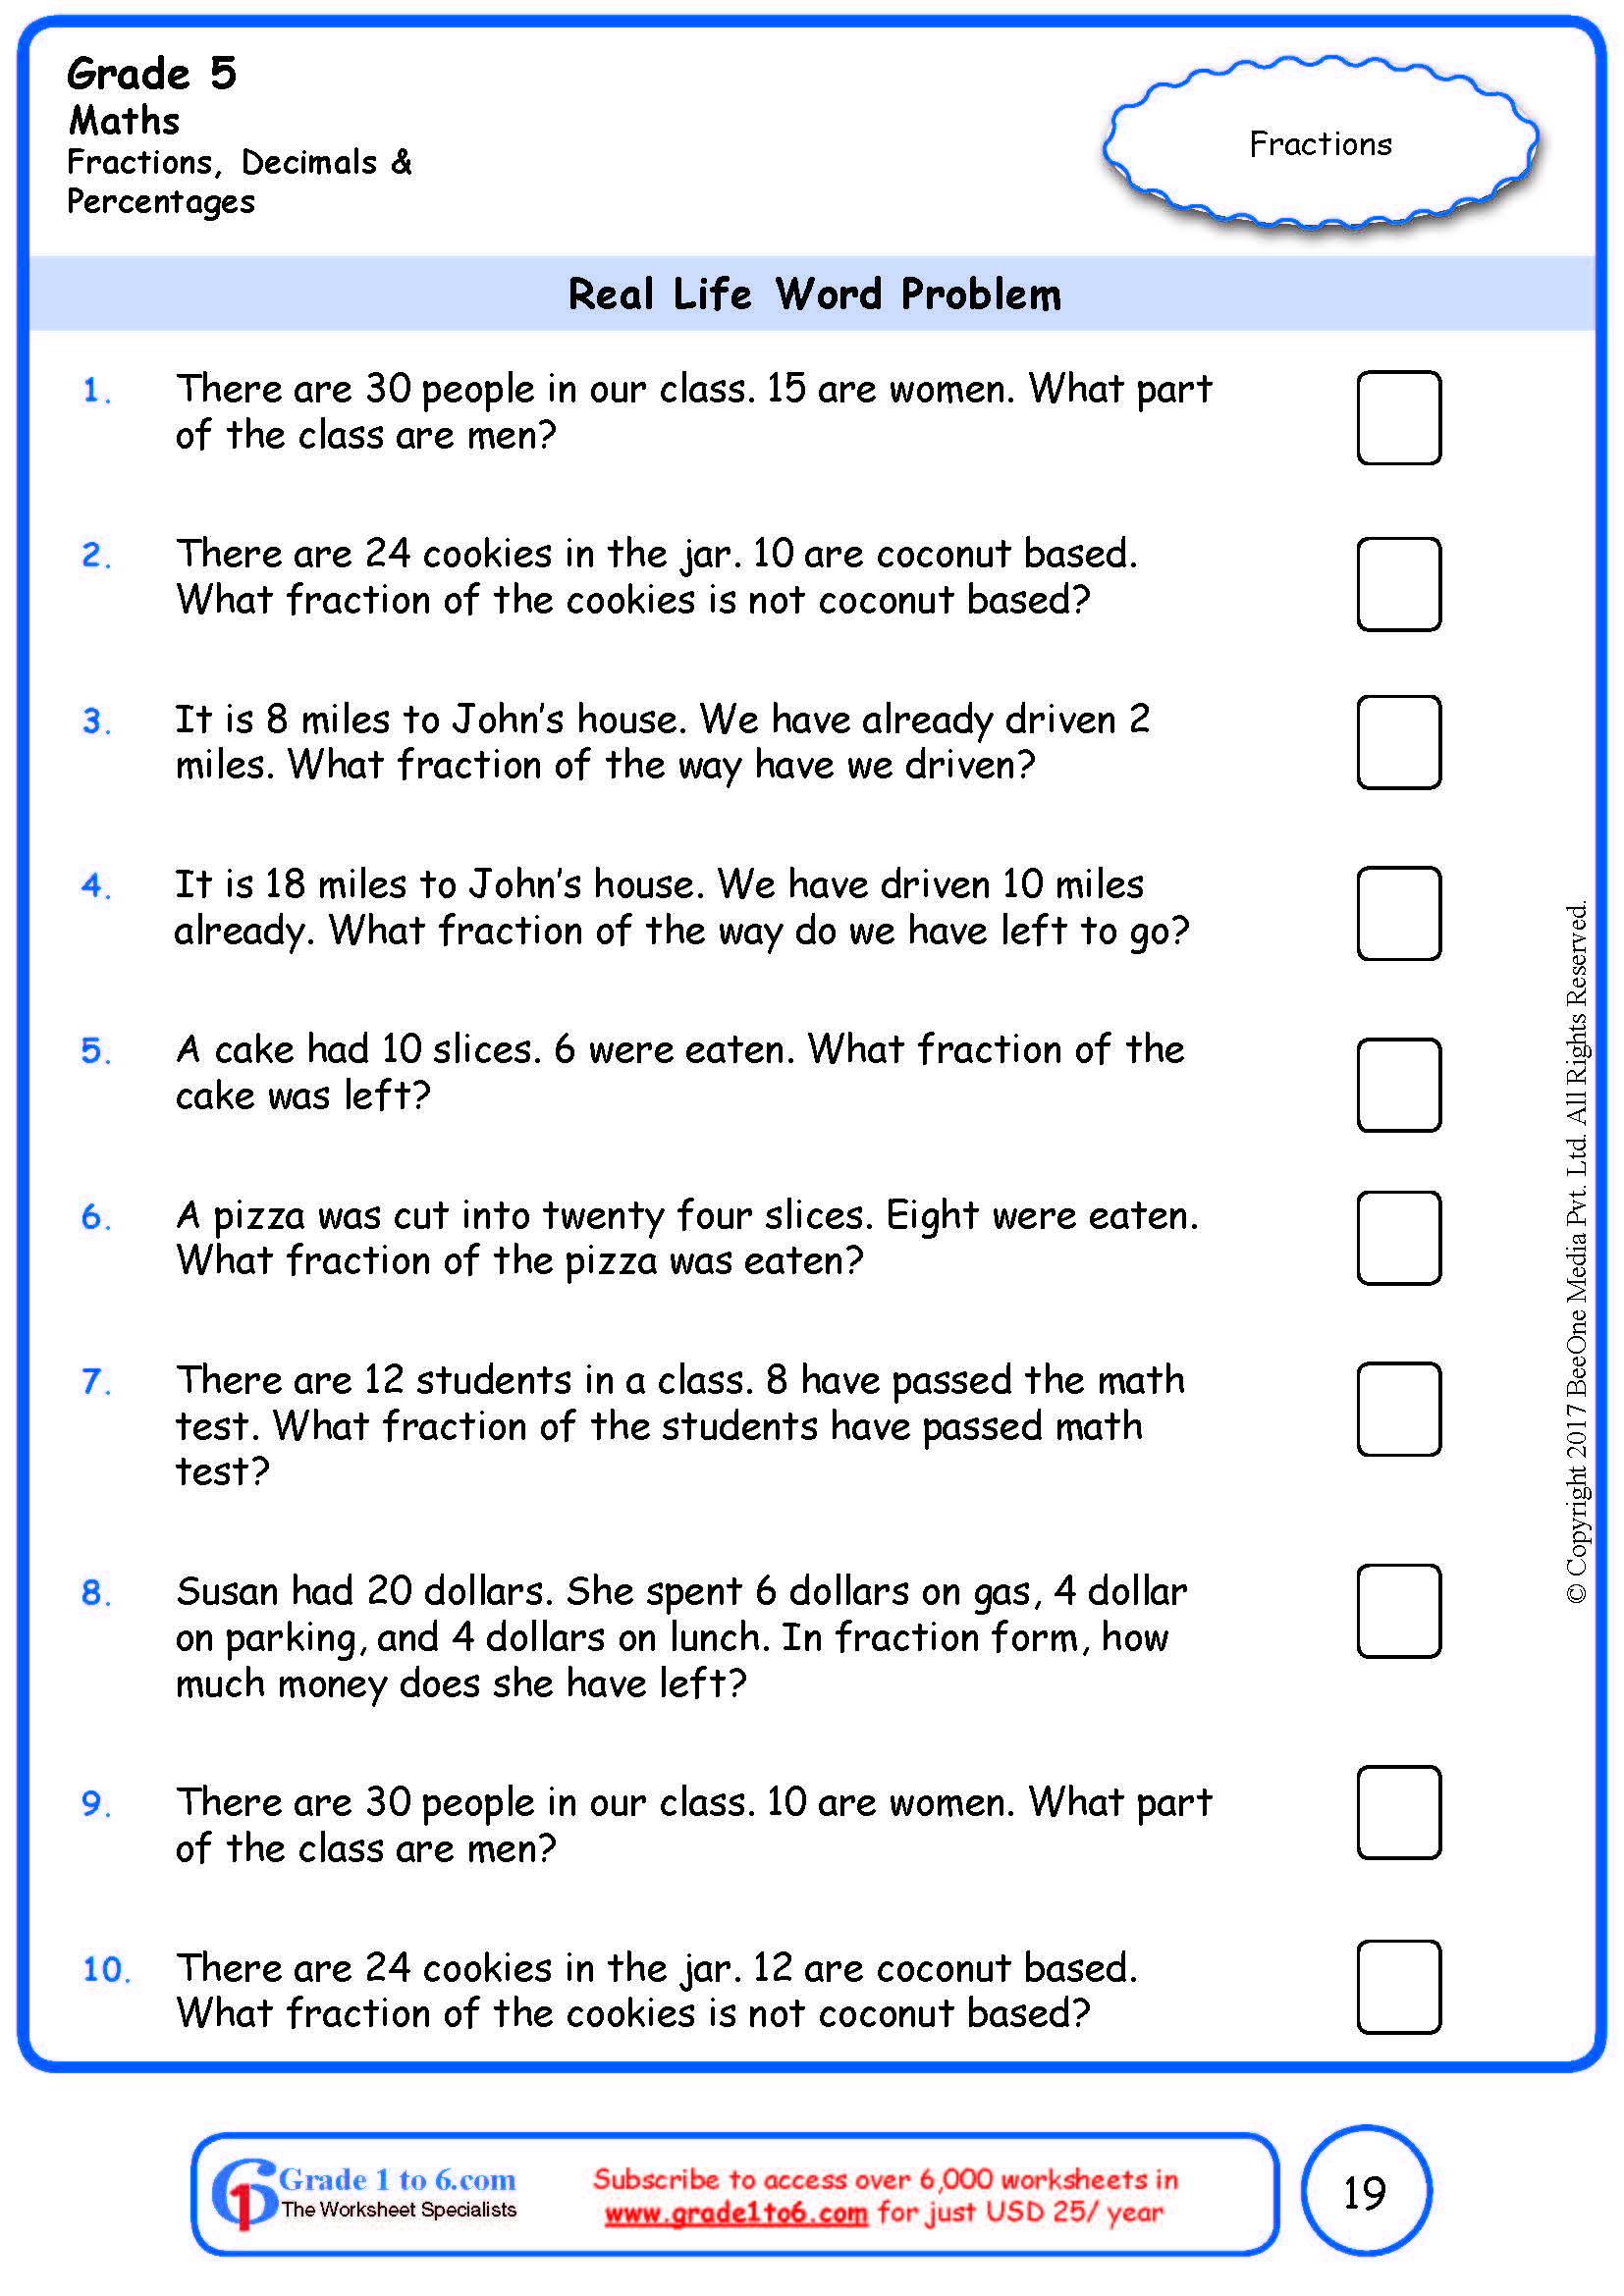 problem solving question for grade 5